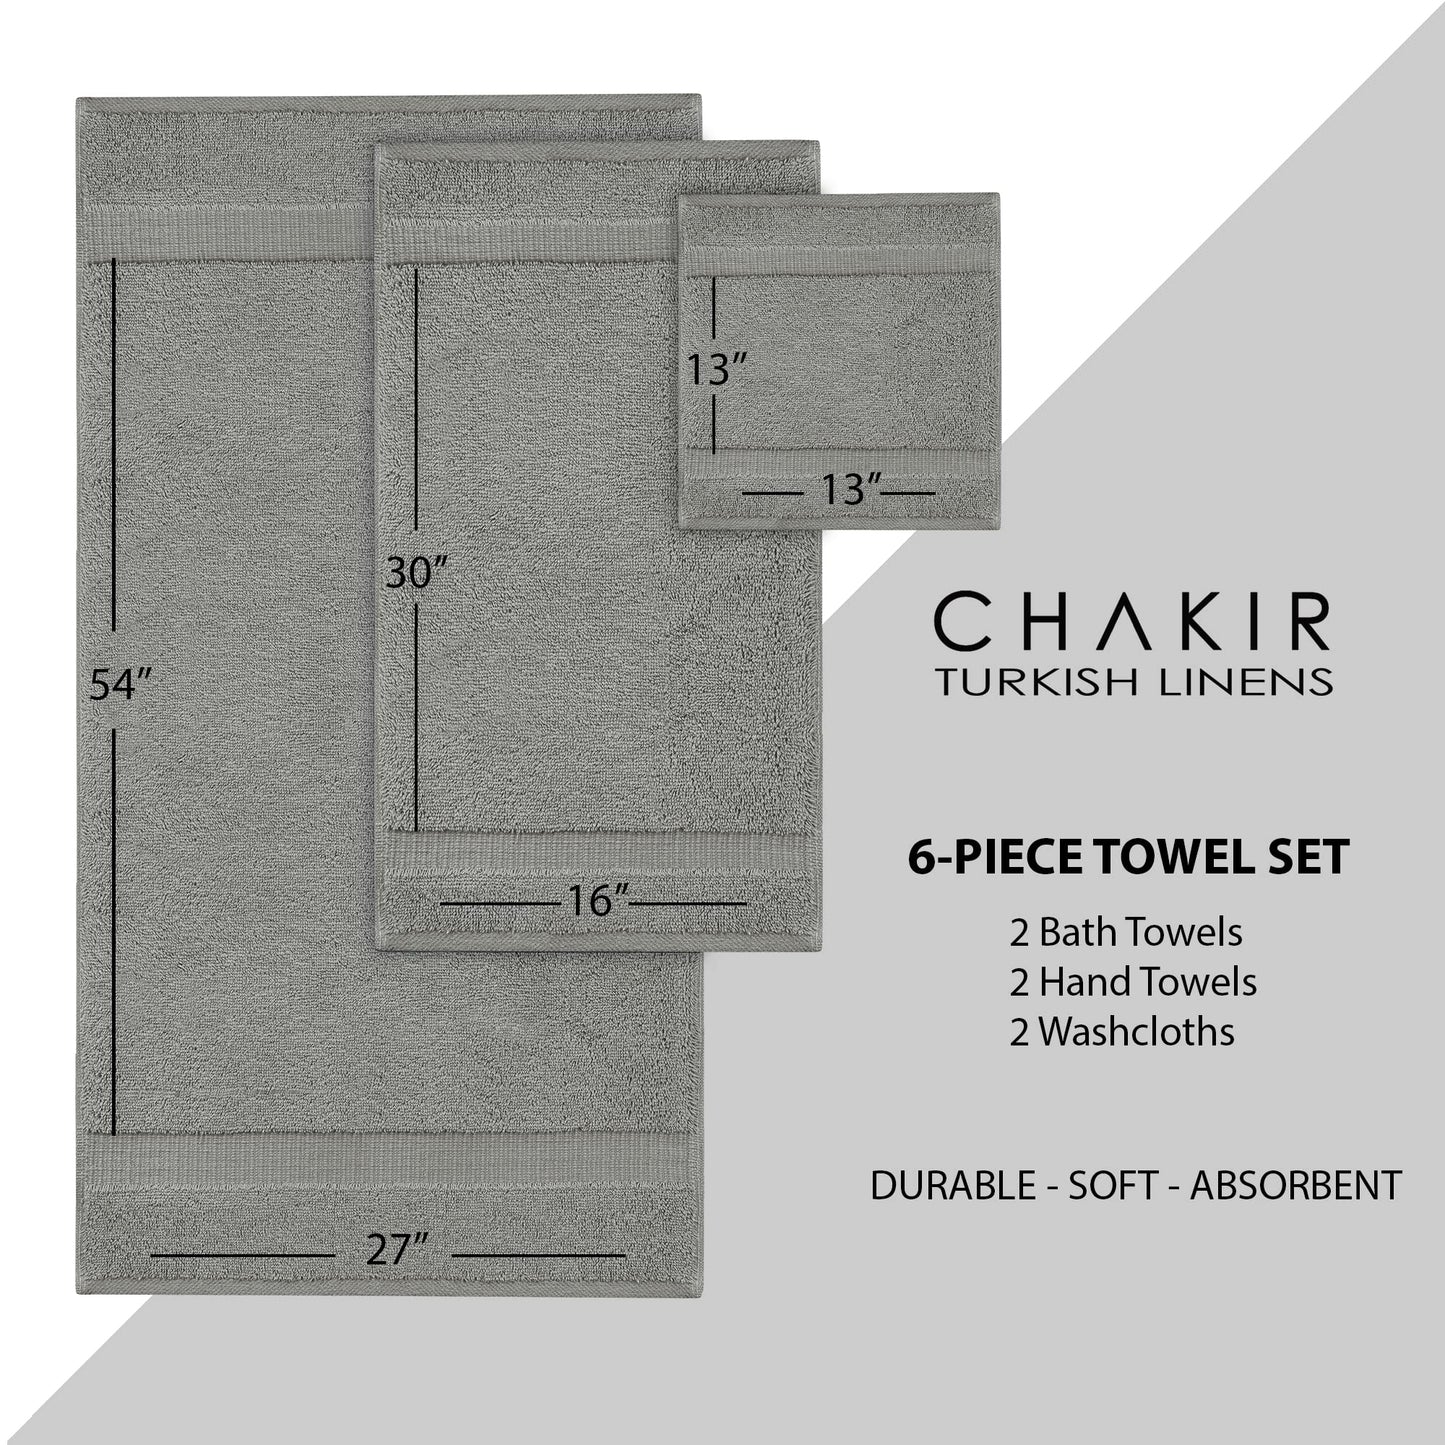 Chakir Turkish Linens Luxury Spa and Hotel Quality Premium Cotton 6-Piece Towel Set (2 x Bath Towels, 2 x Hand Towels, 2 x Washcloths)